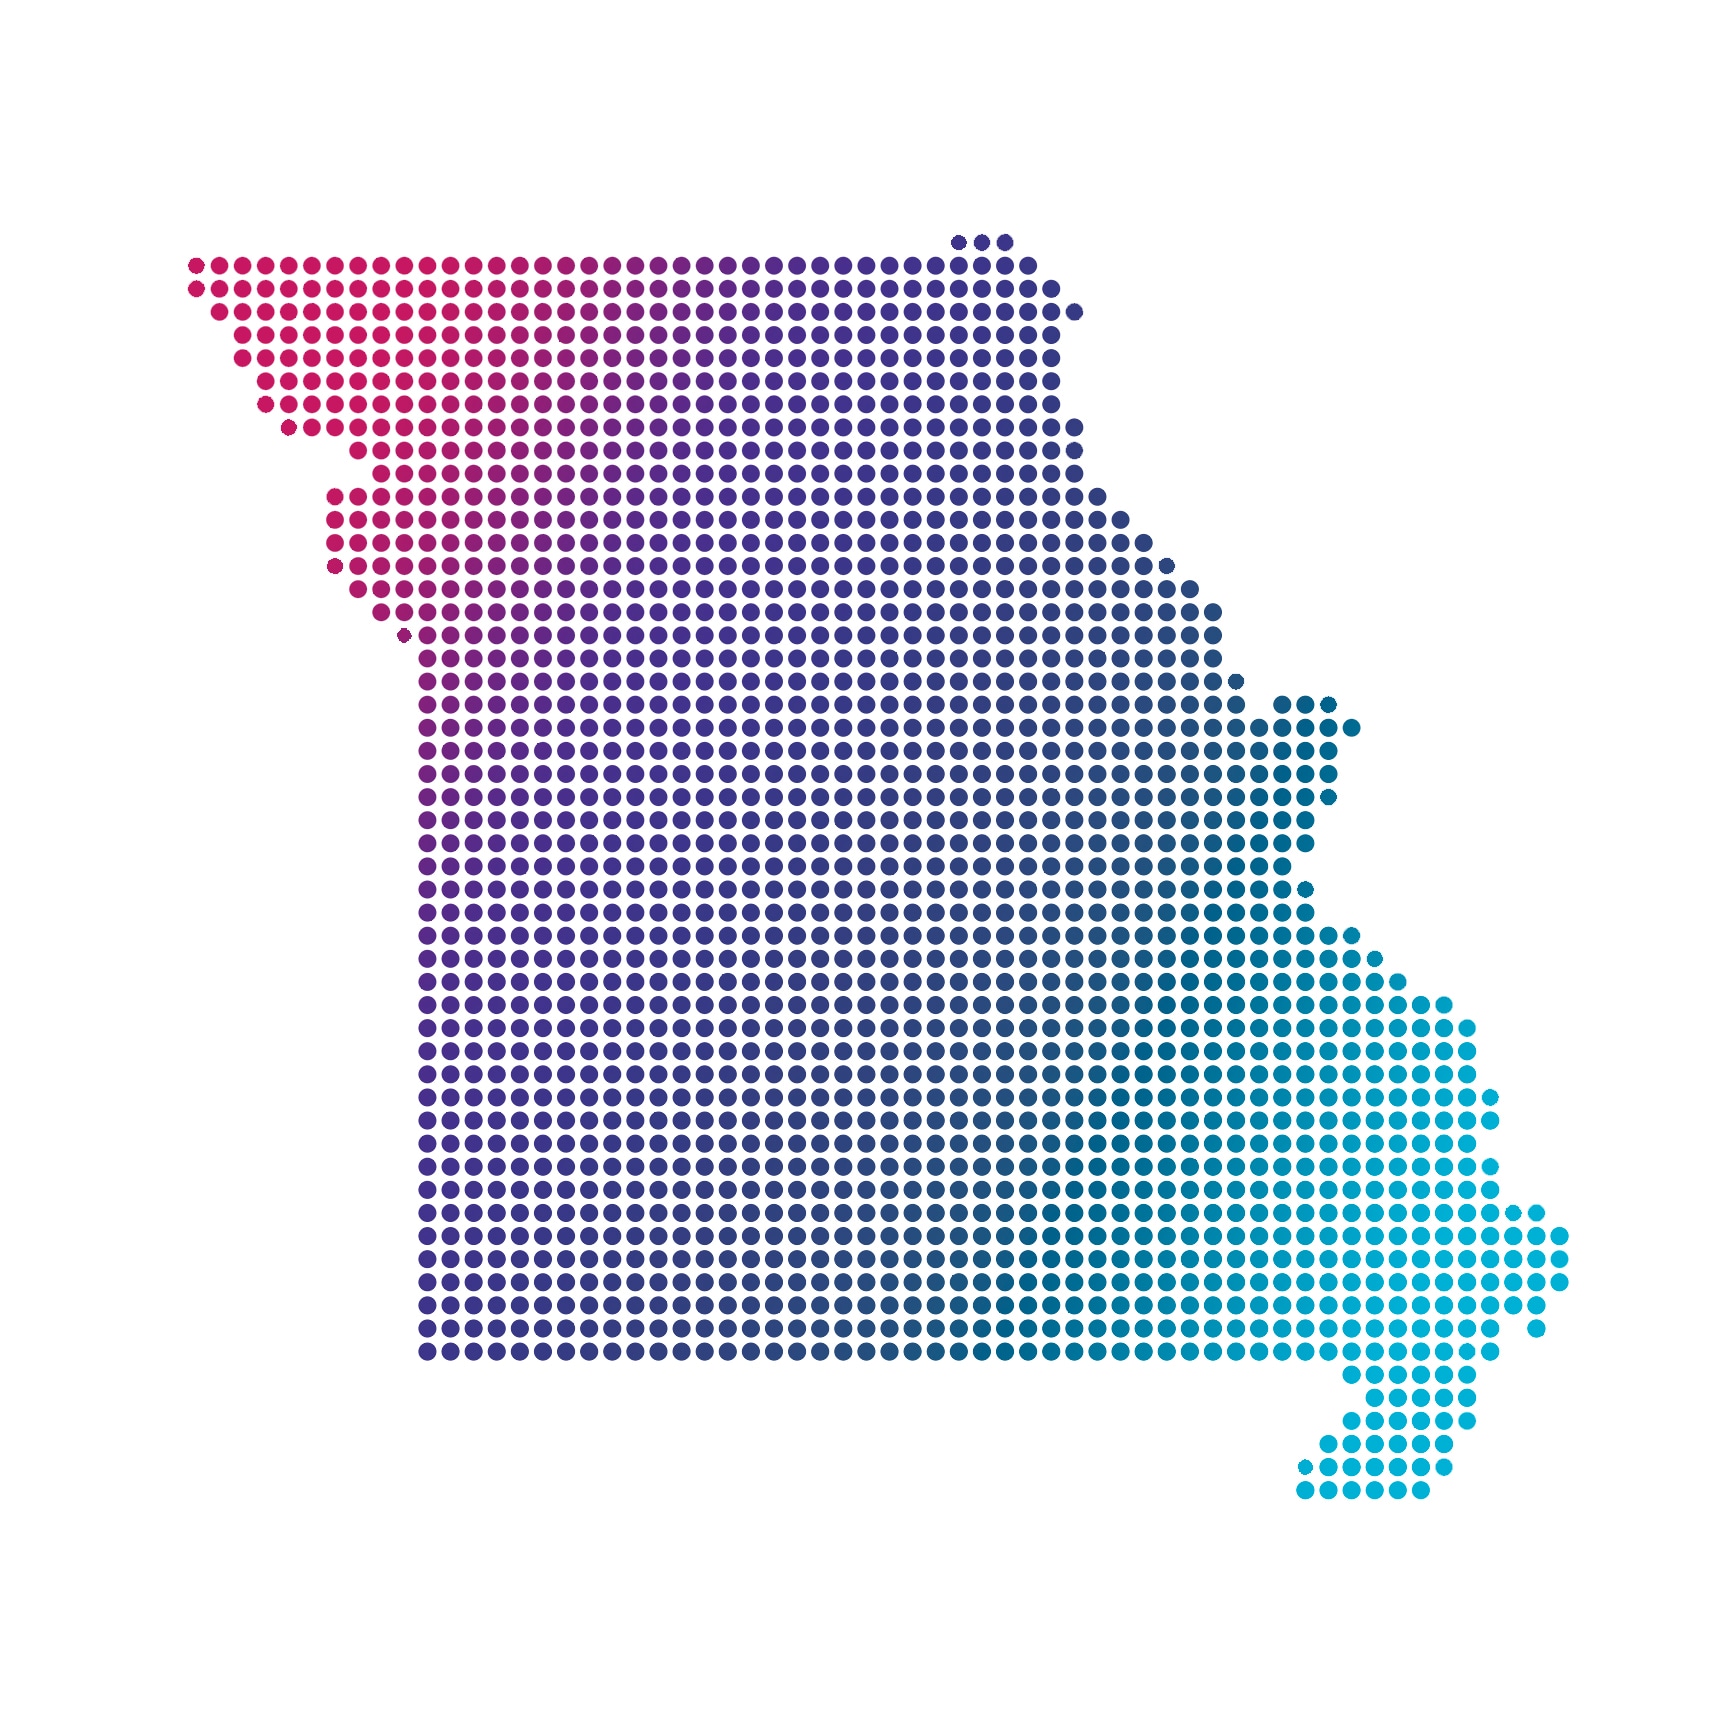 Missouri map of blue dots on white background